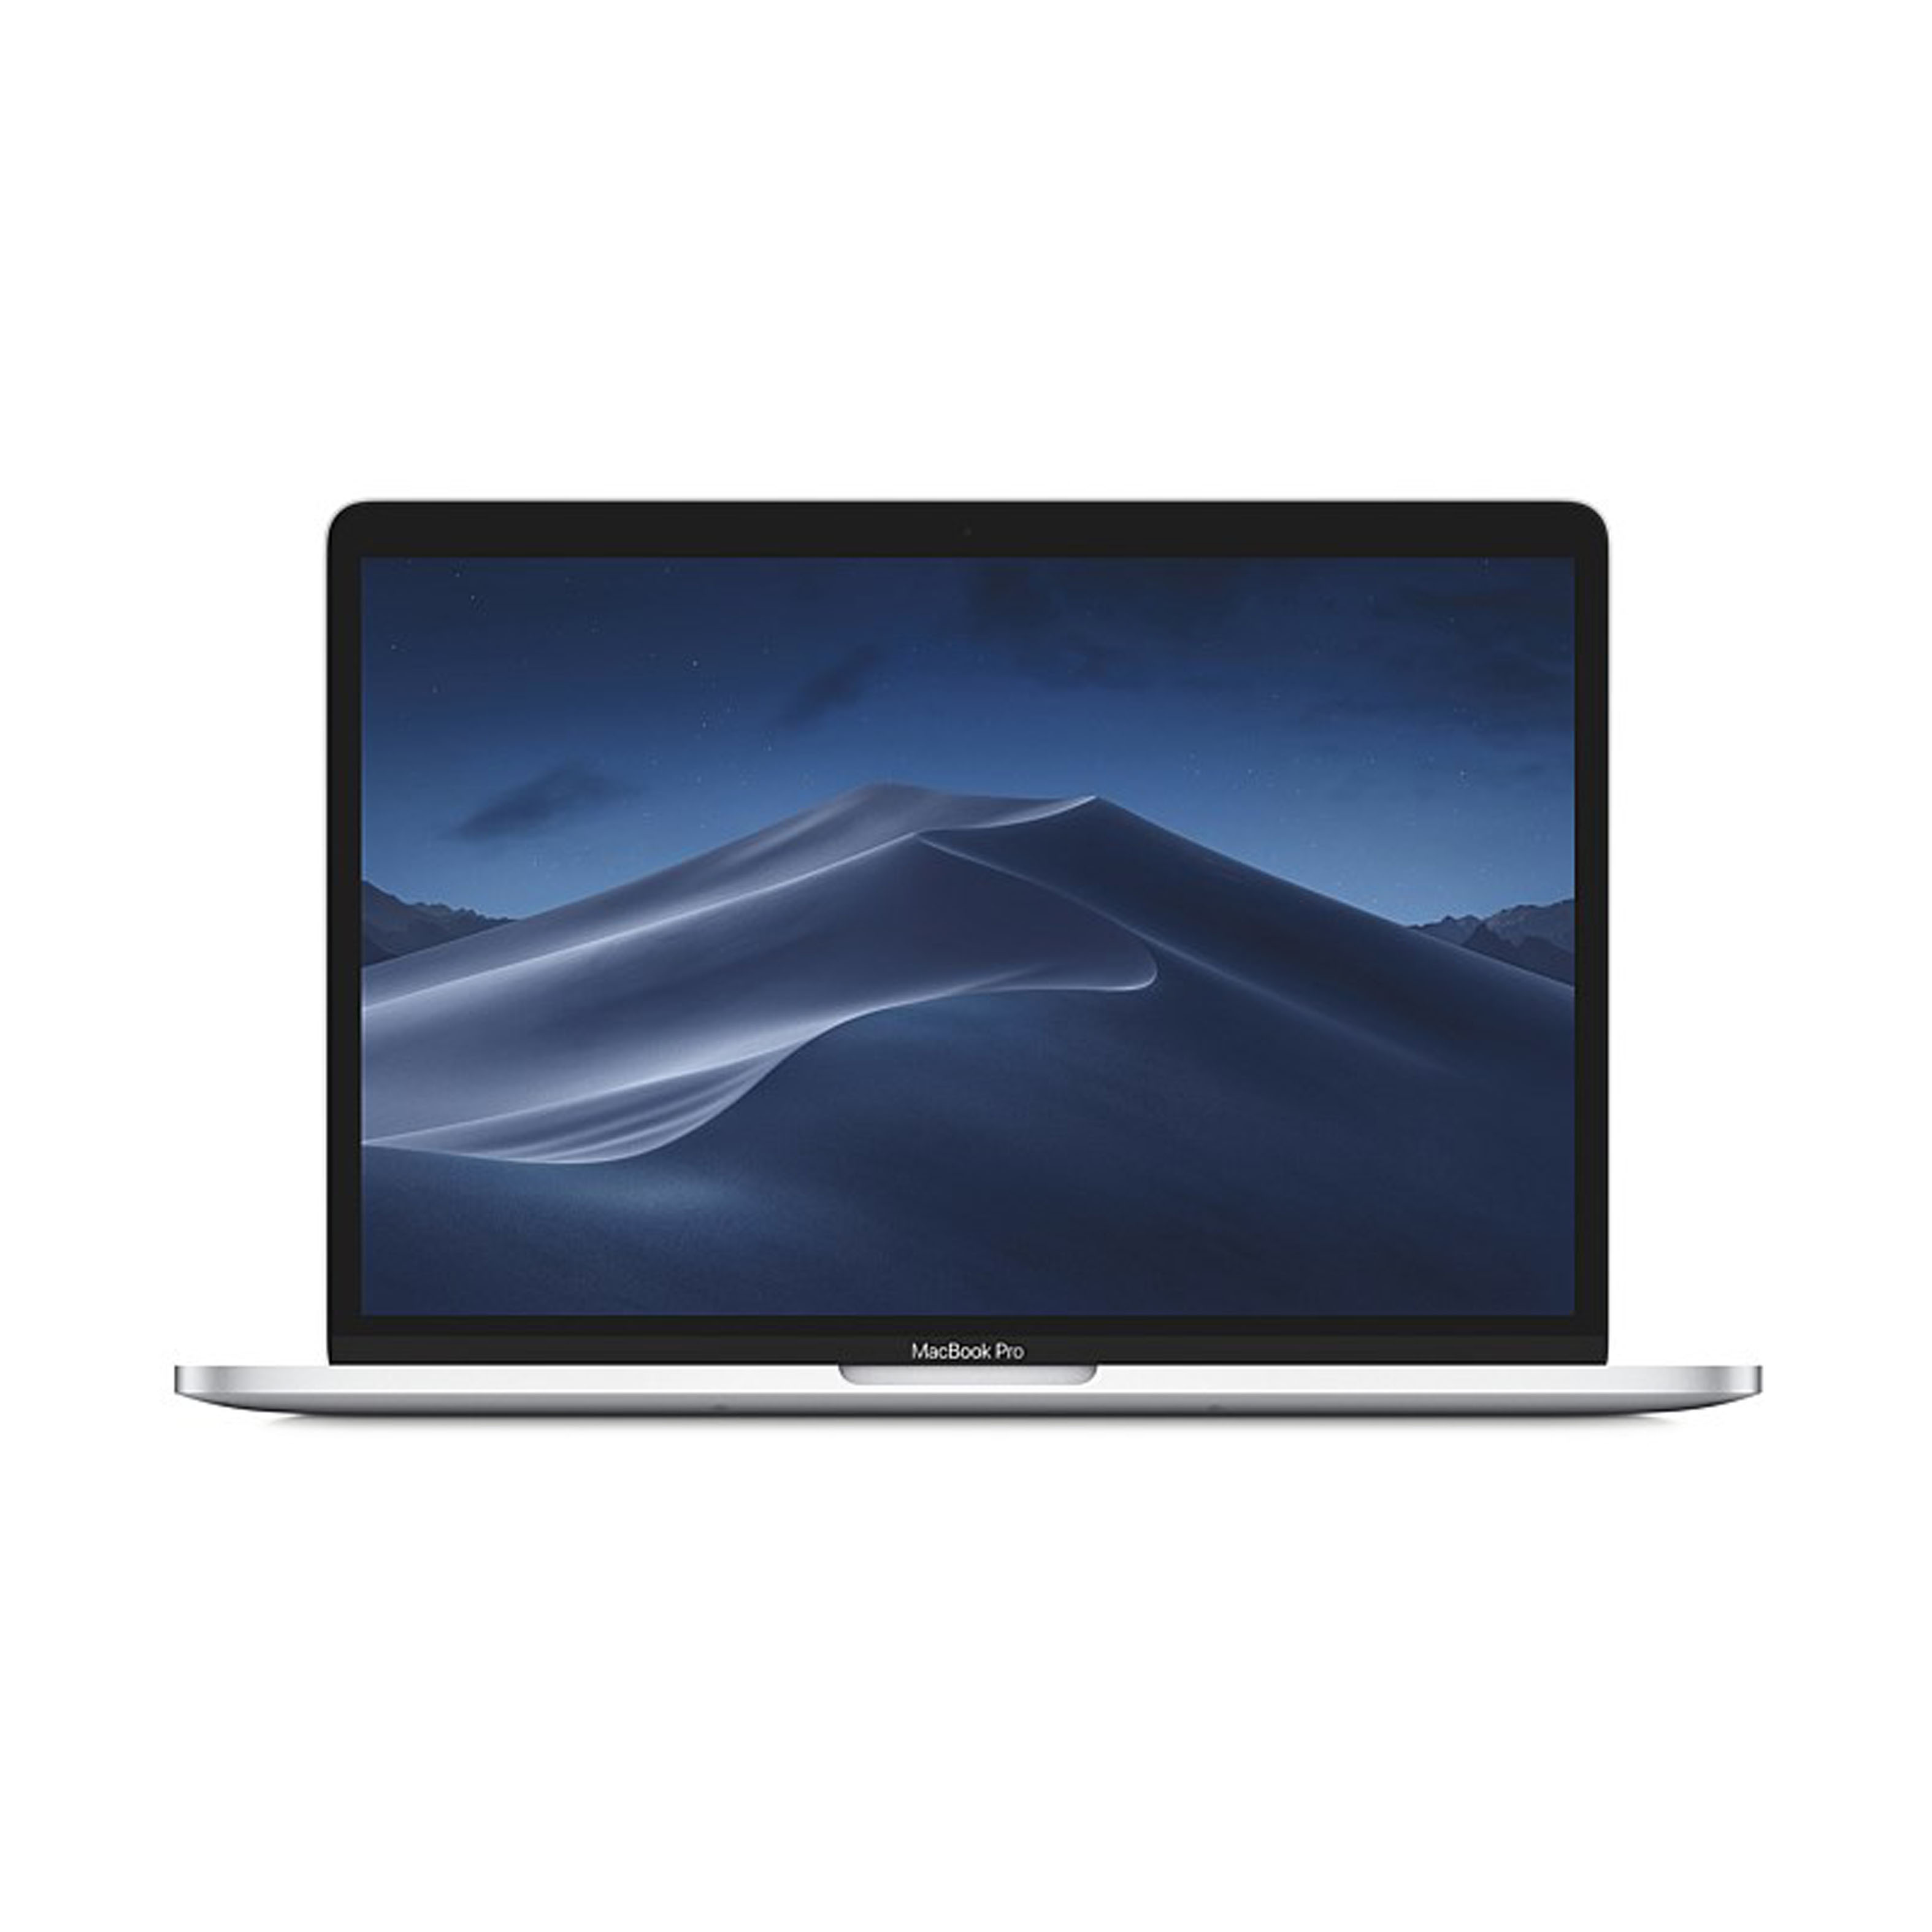 APPLE MacBook Pro 2019 MV962J/A i5 256GB 売って買う - www